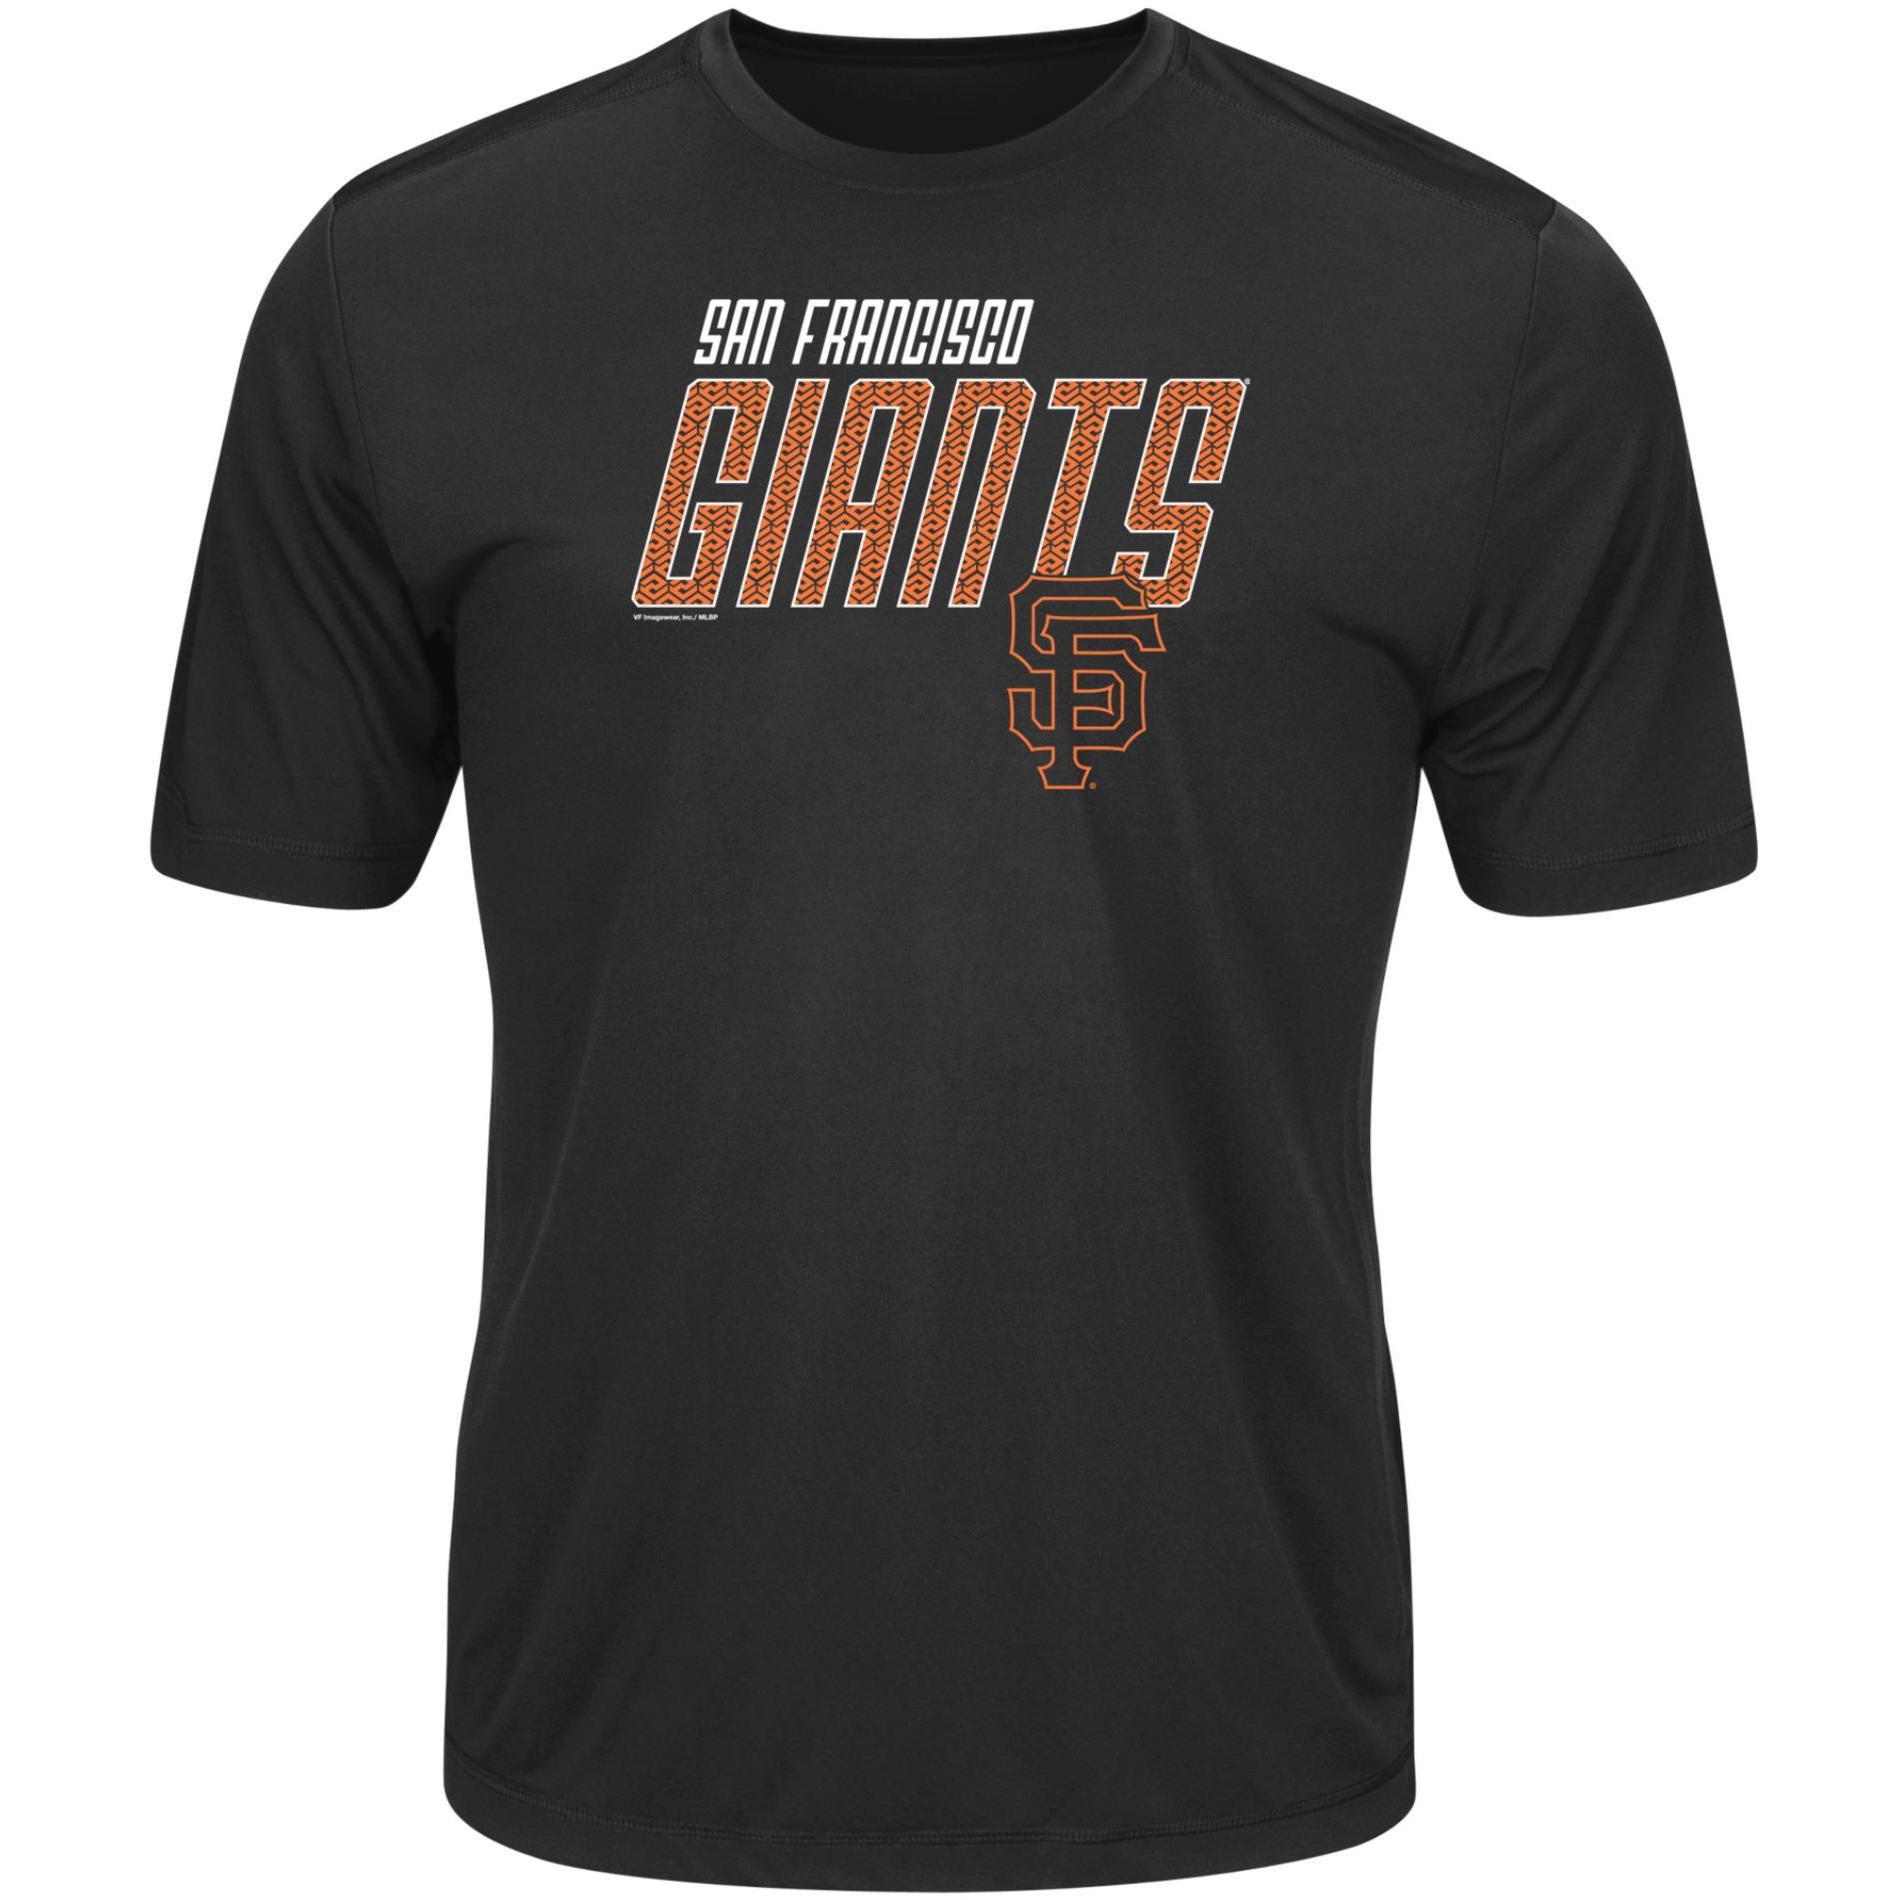 MLB Men's Graphic T-Shirt - San Francisco Giants